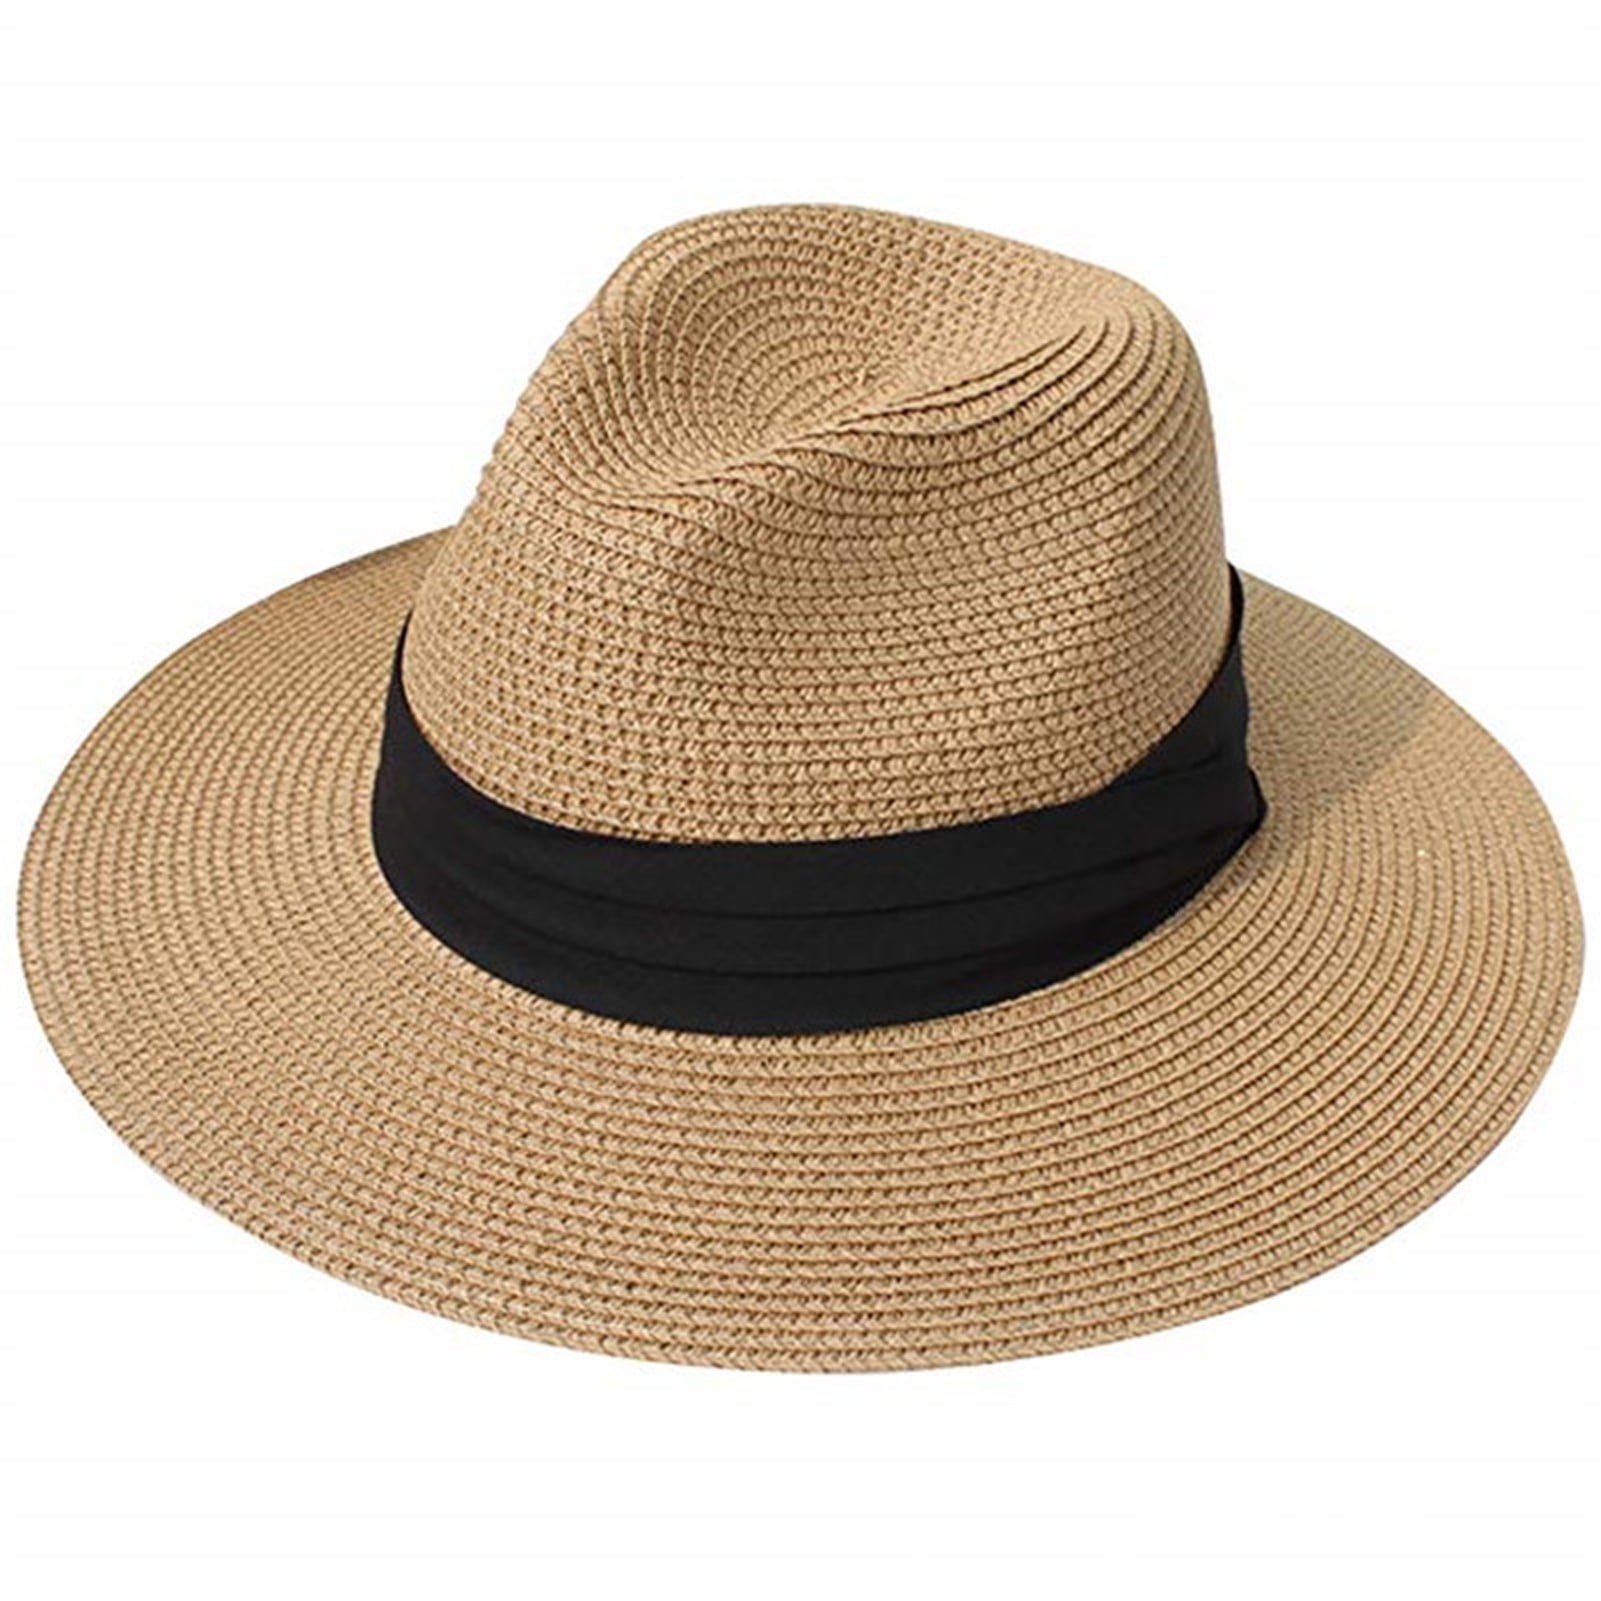 Visland Beach Hat, Women's Sun hat, Sun Protection Wide Brim